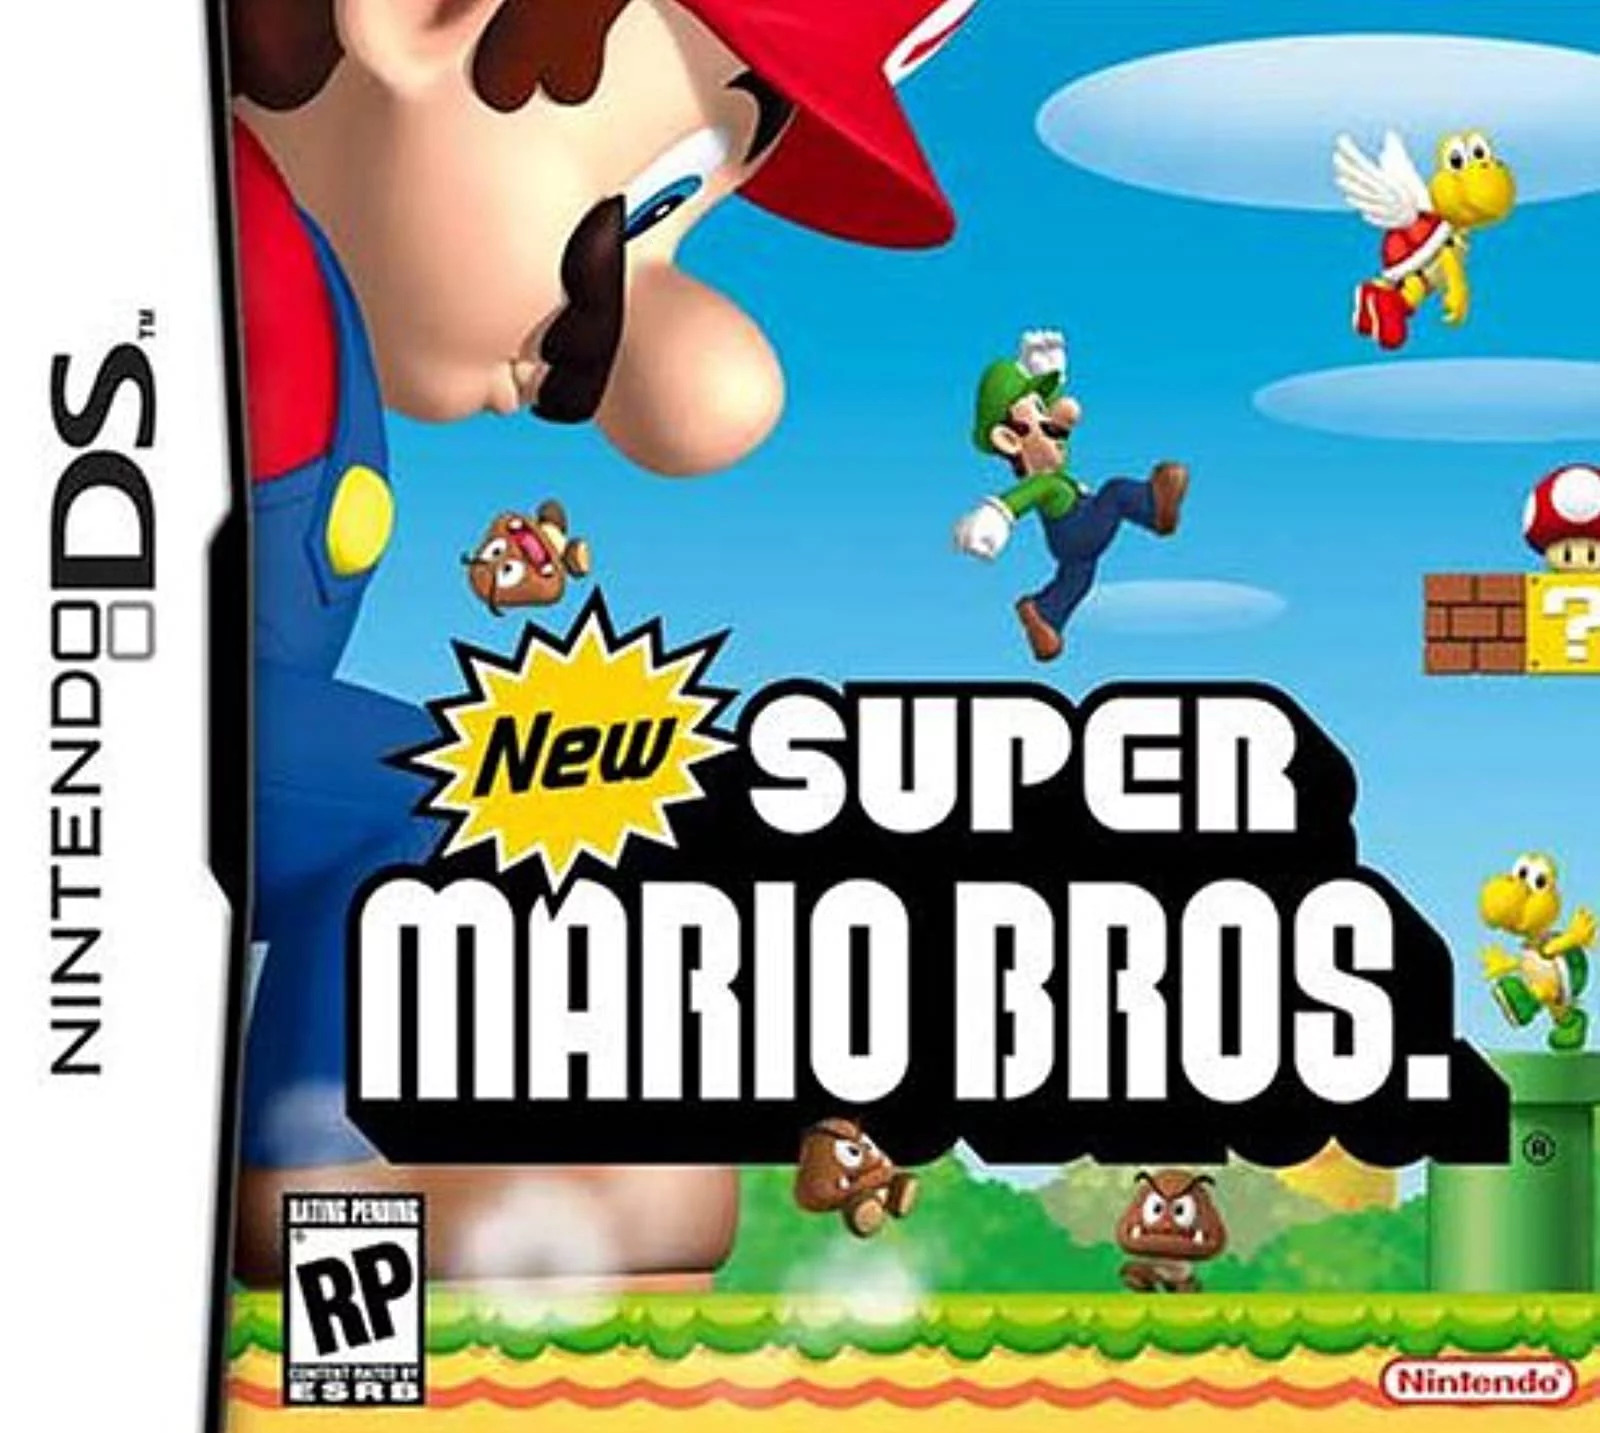 NDS Super Mario Bros